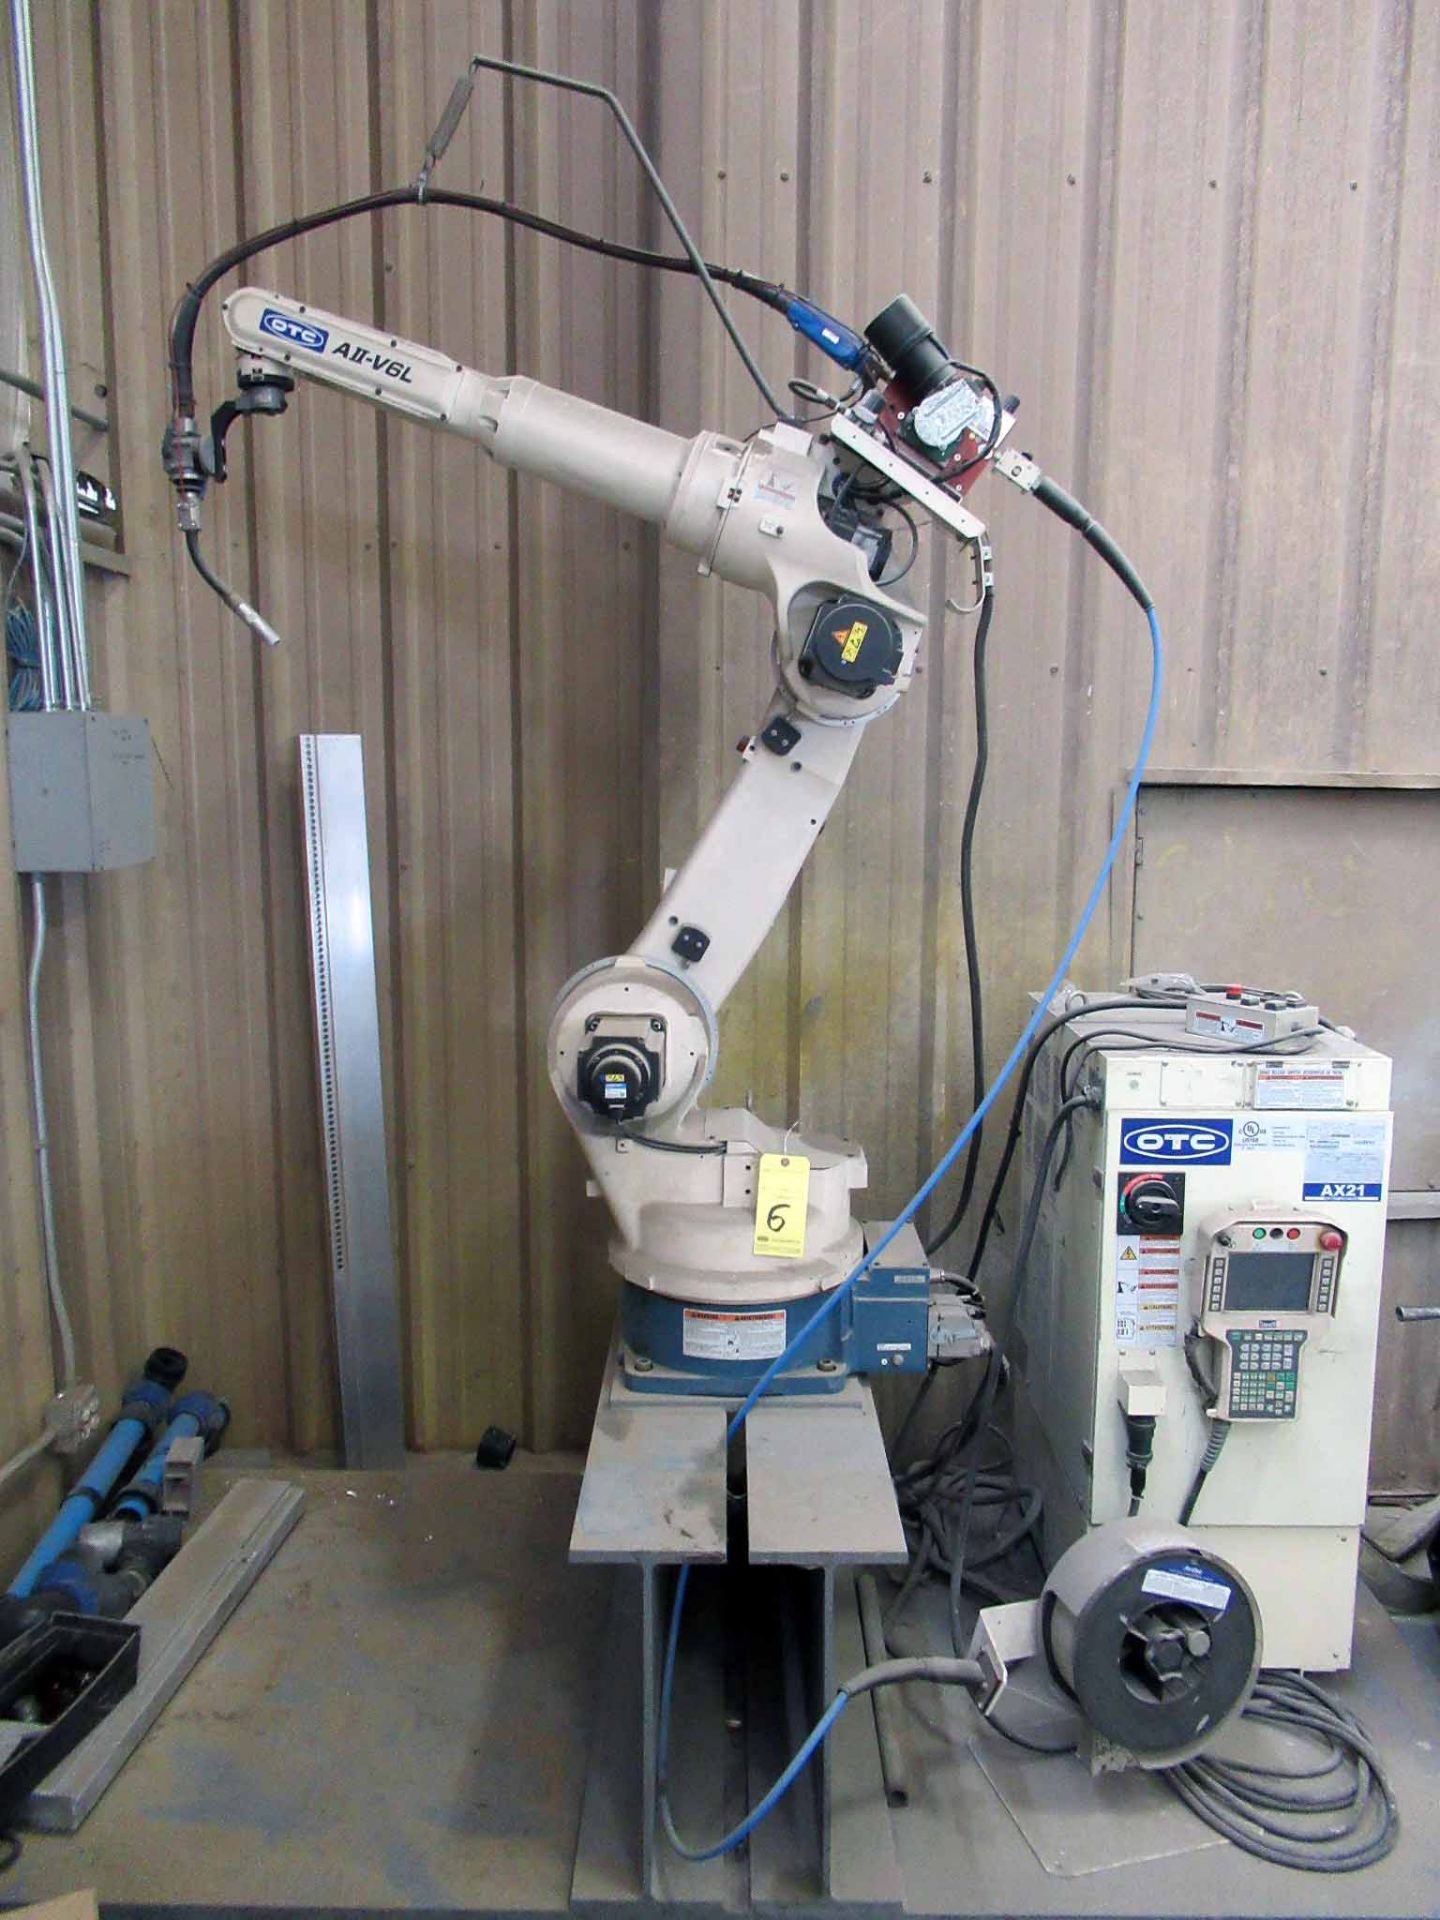 ROBOTIC WELDING SYSTEM, DAIHEN OTC MDL. AII-V6L, new 2009, mtd. on Mdl. NV6L robot manipulator,